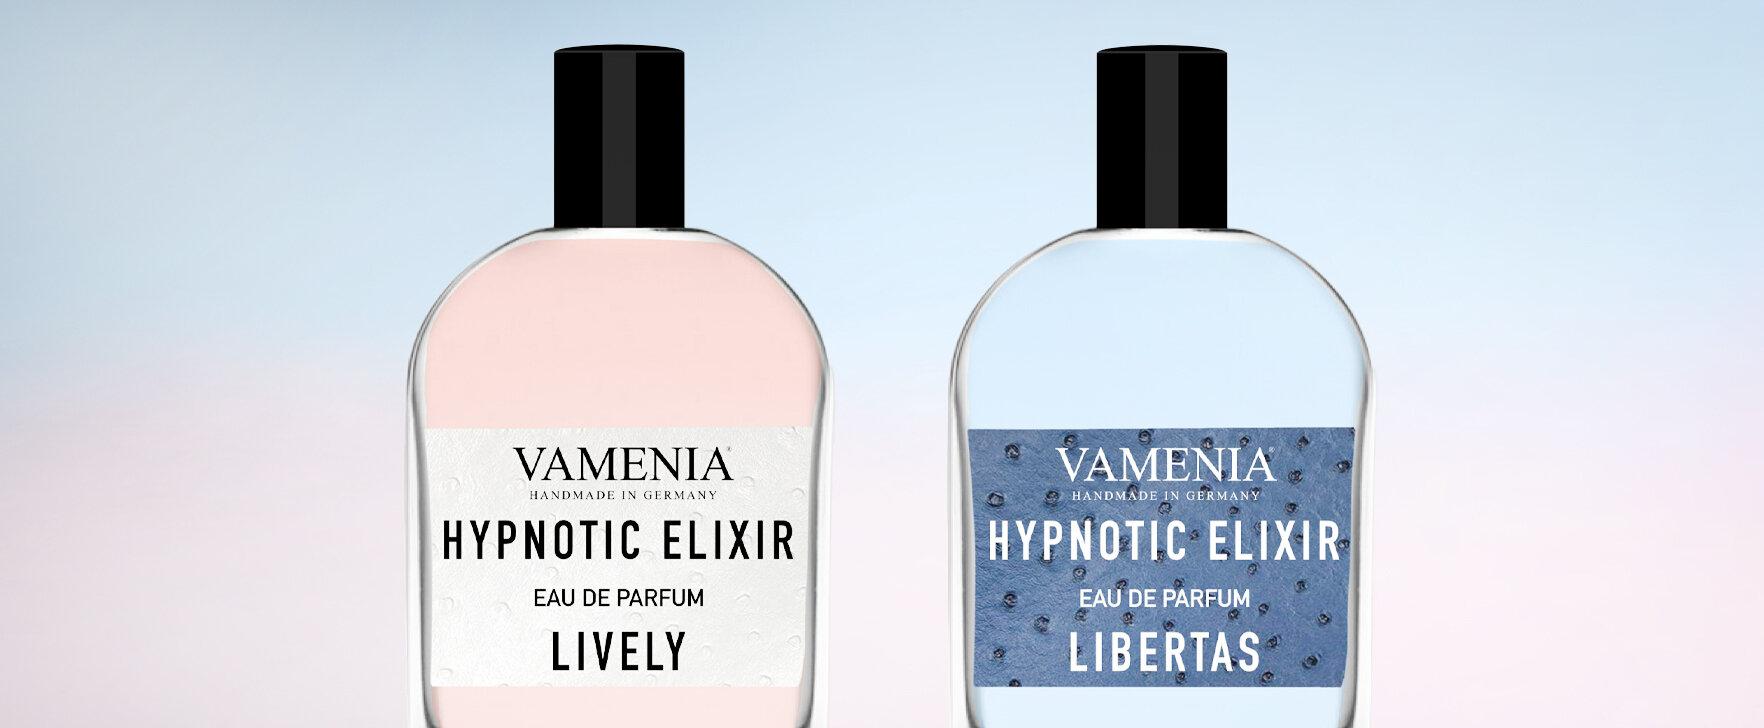 Fragrance Debut: The New "Hypnotic Elixir" Perfume Line From Vamenia 